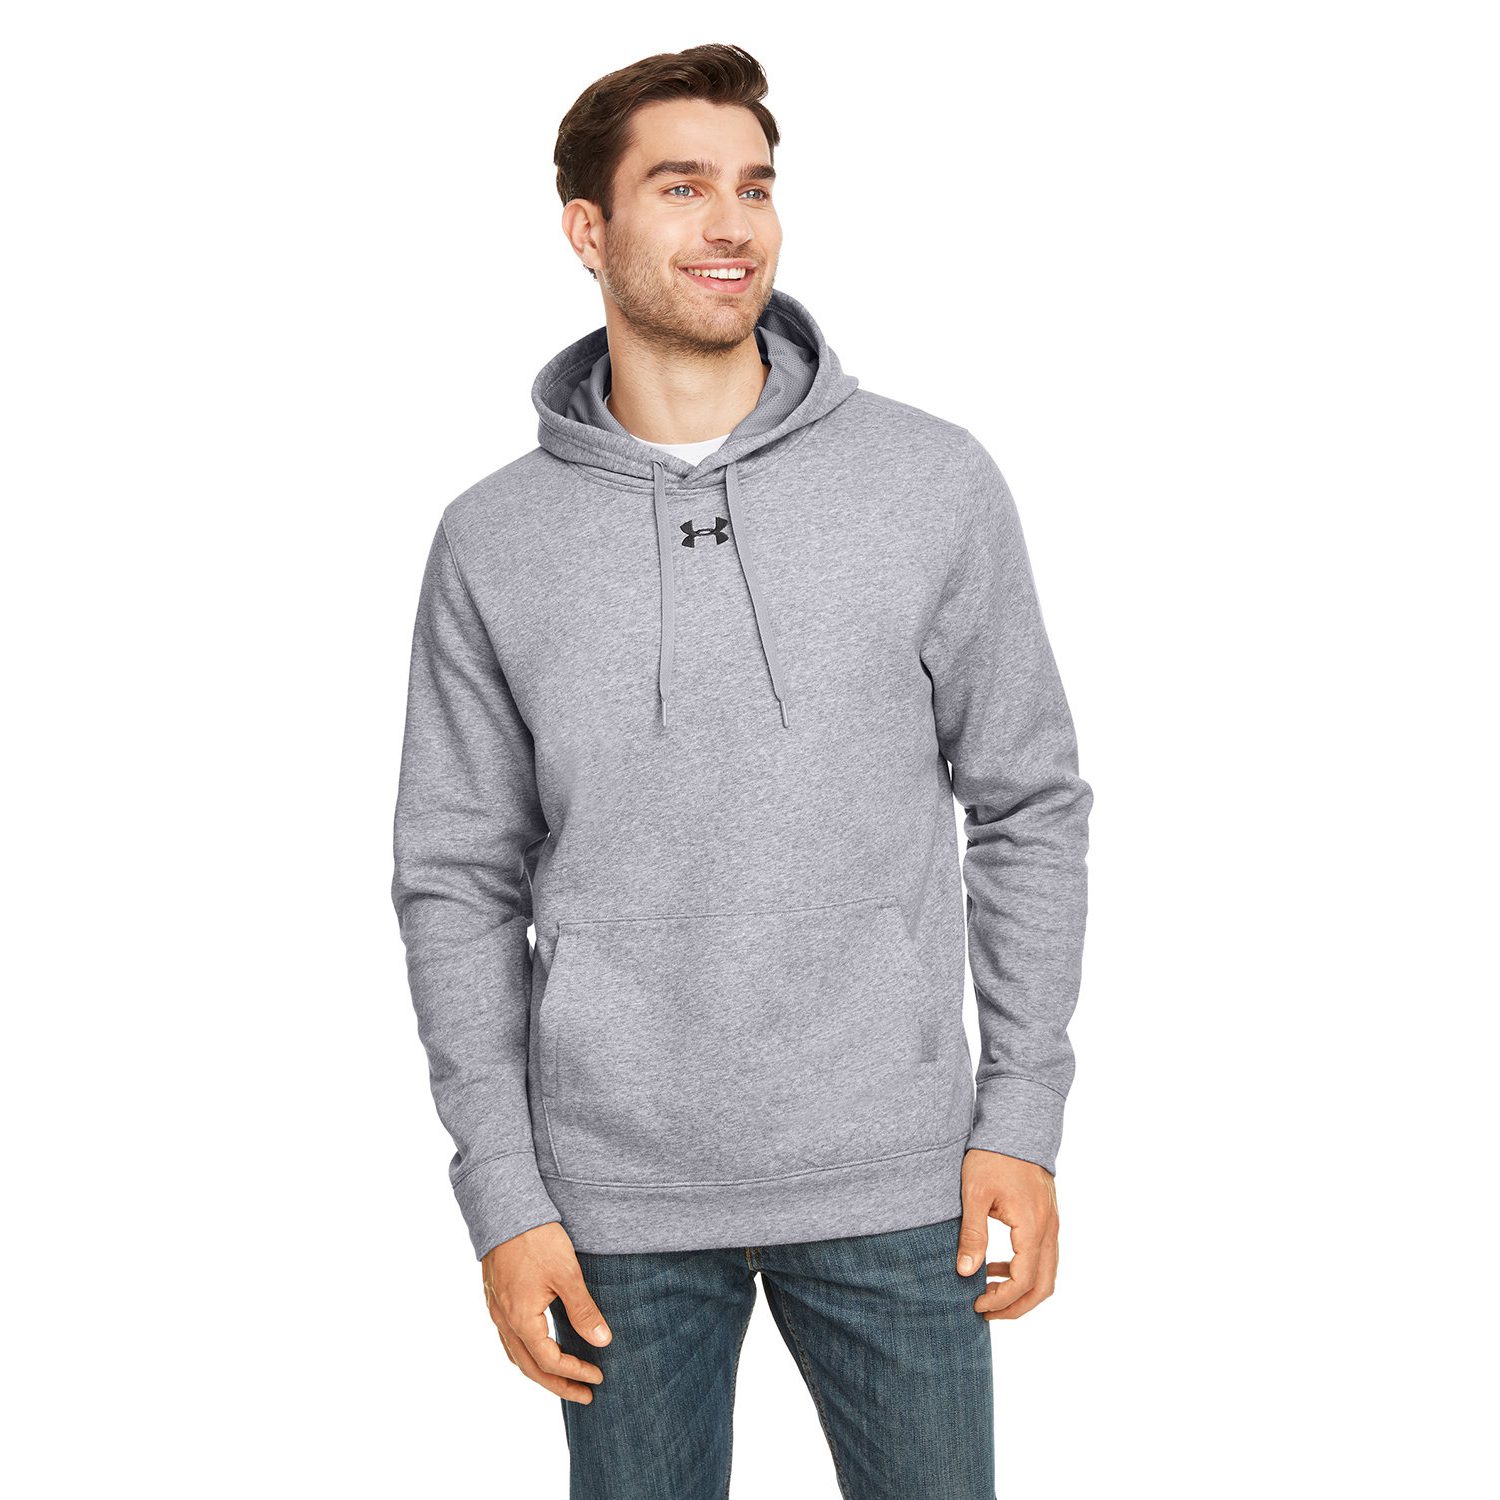 UNDER ARMOUR® Men's Hustle Pullover Hooded Sweatshirt #1300123 Heather Grey